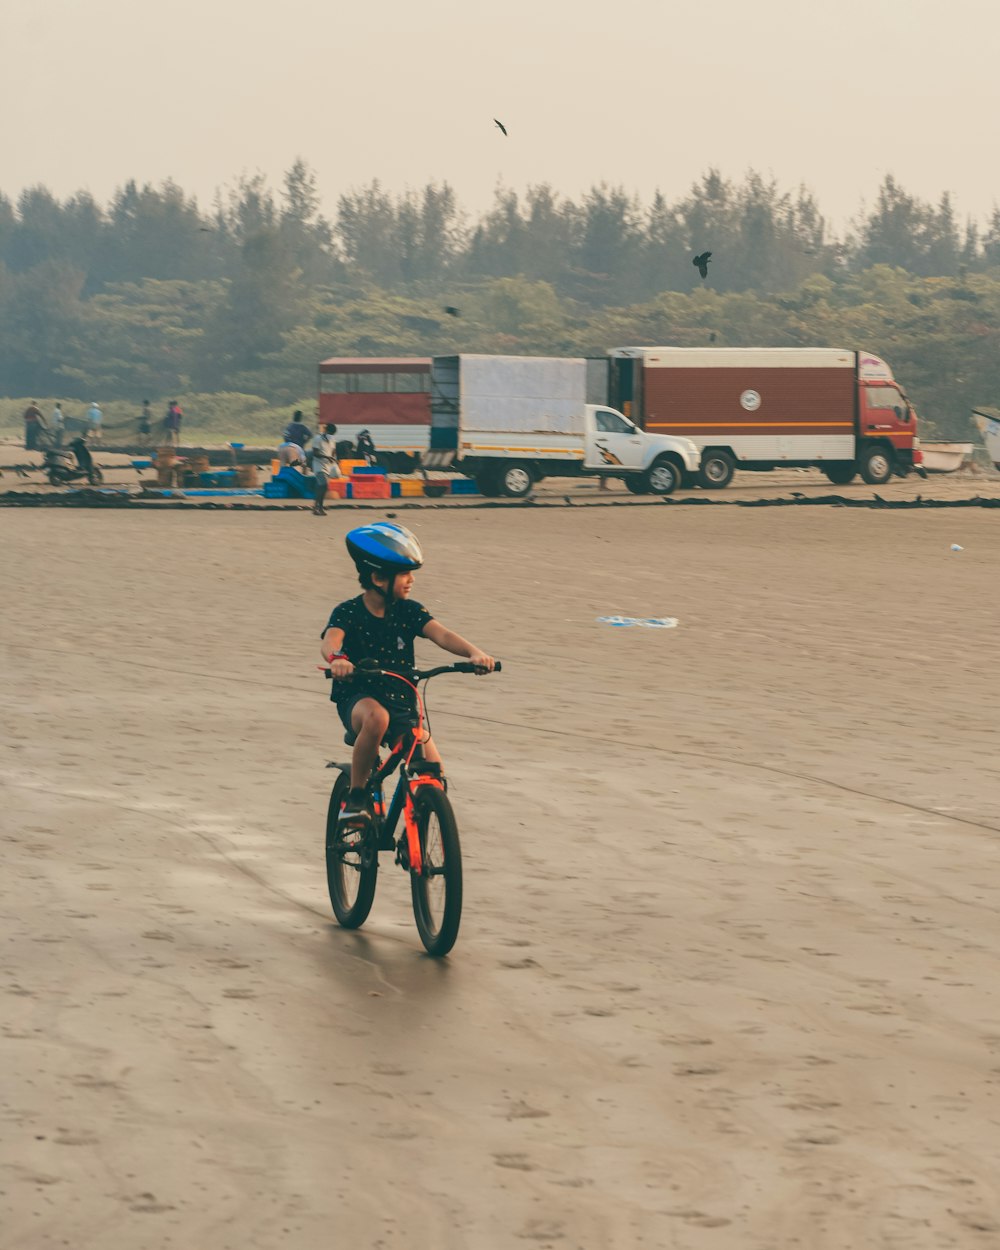 a child riding a bike on a sandy beach